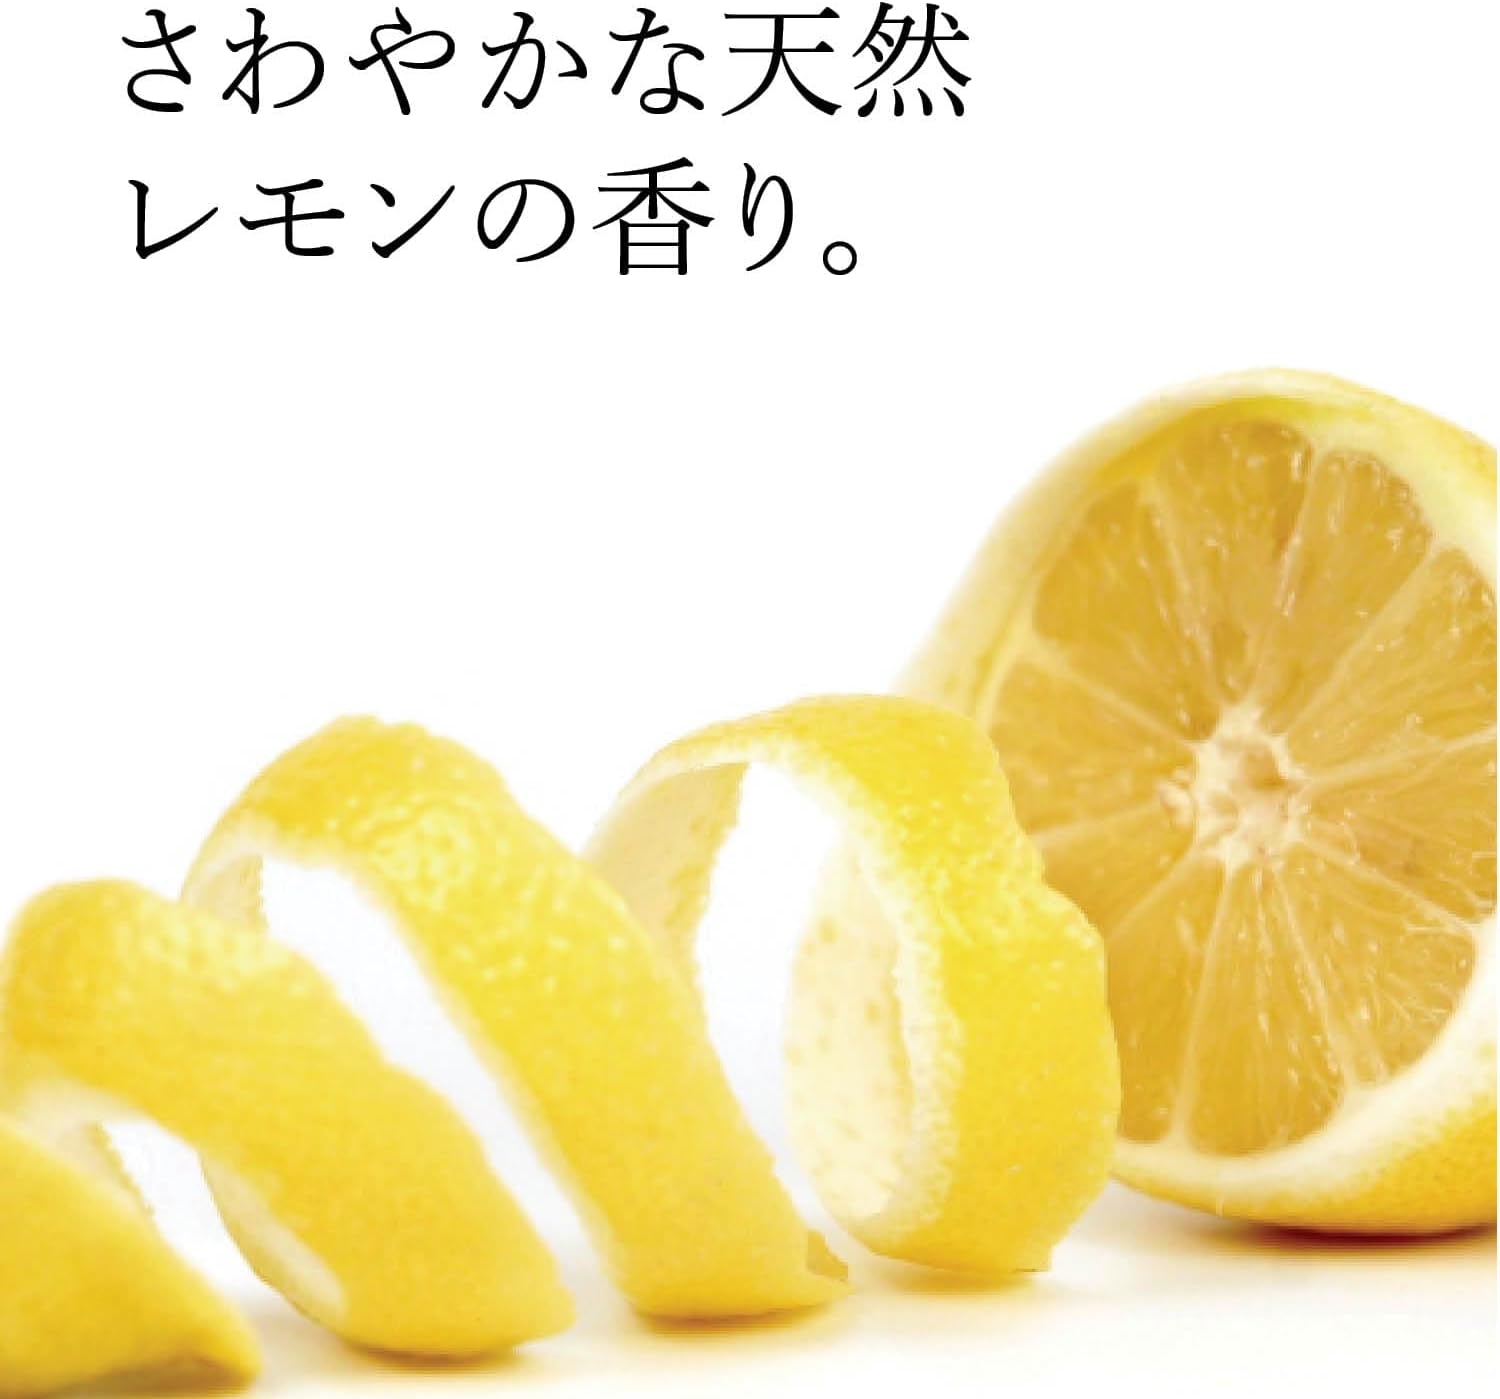 ecostore Dishwash Liquid (Lemon) 1L Dishwashing Detergent : Health & Household